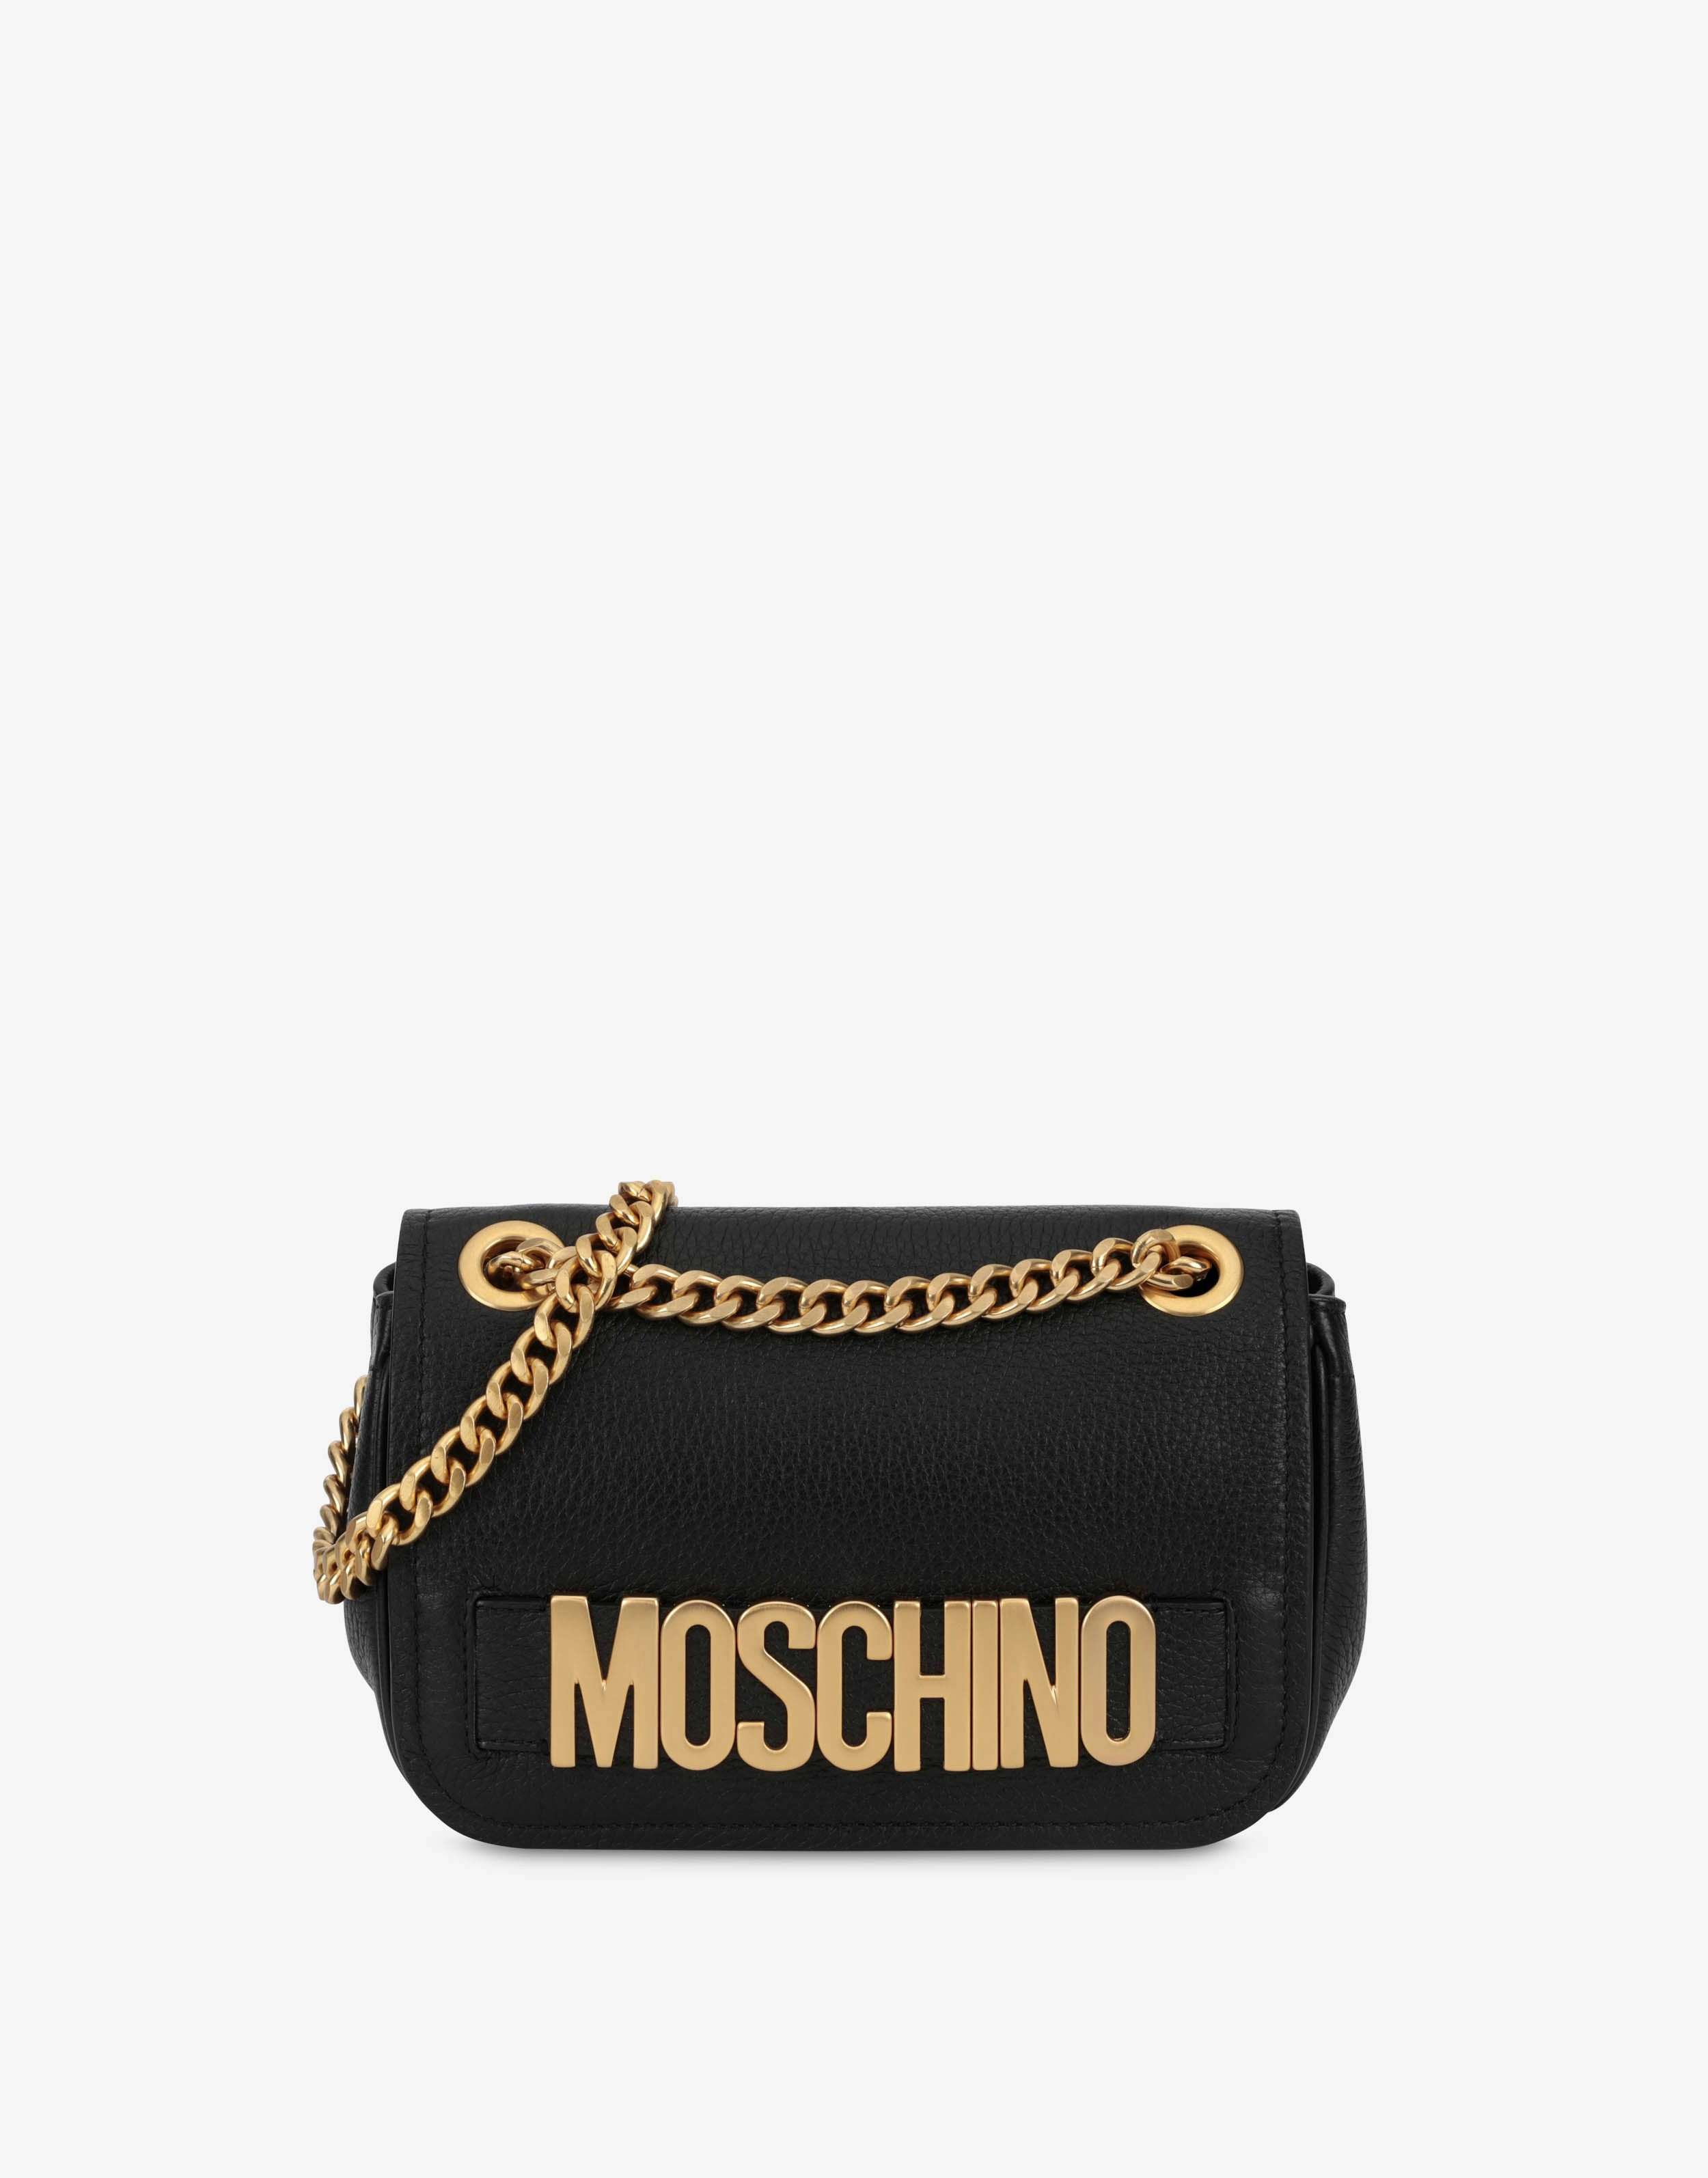 Moschino Handbags On Sale Deals | website.jkuat.ac.ke